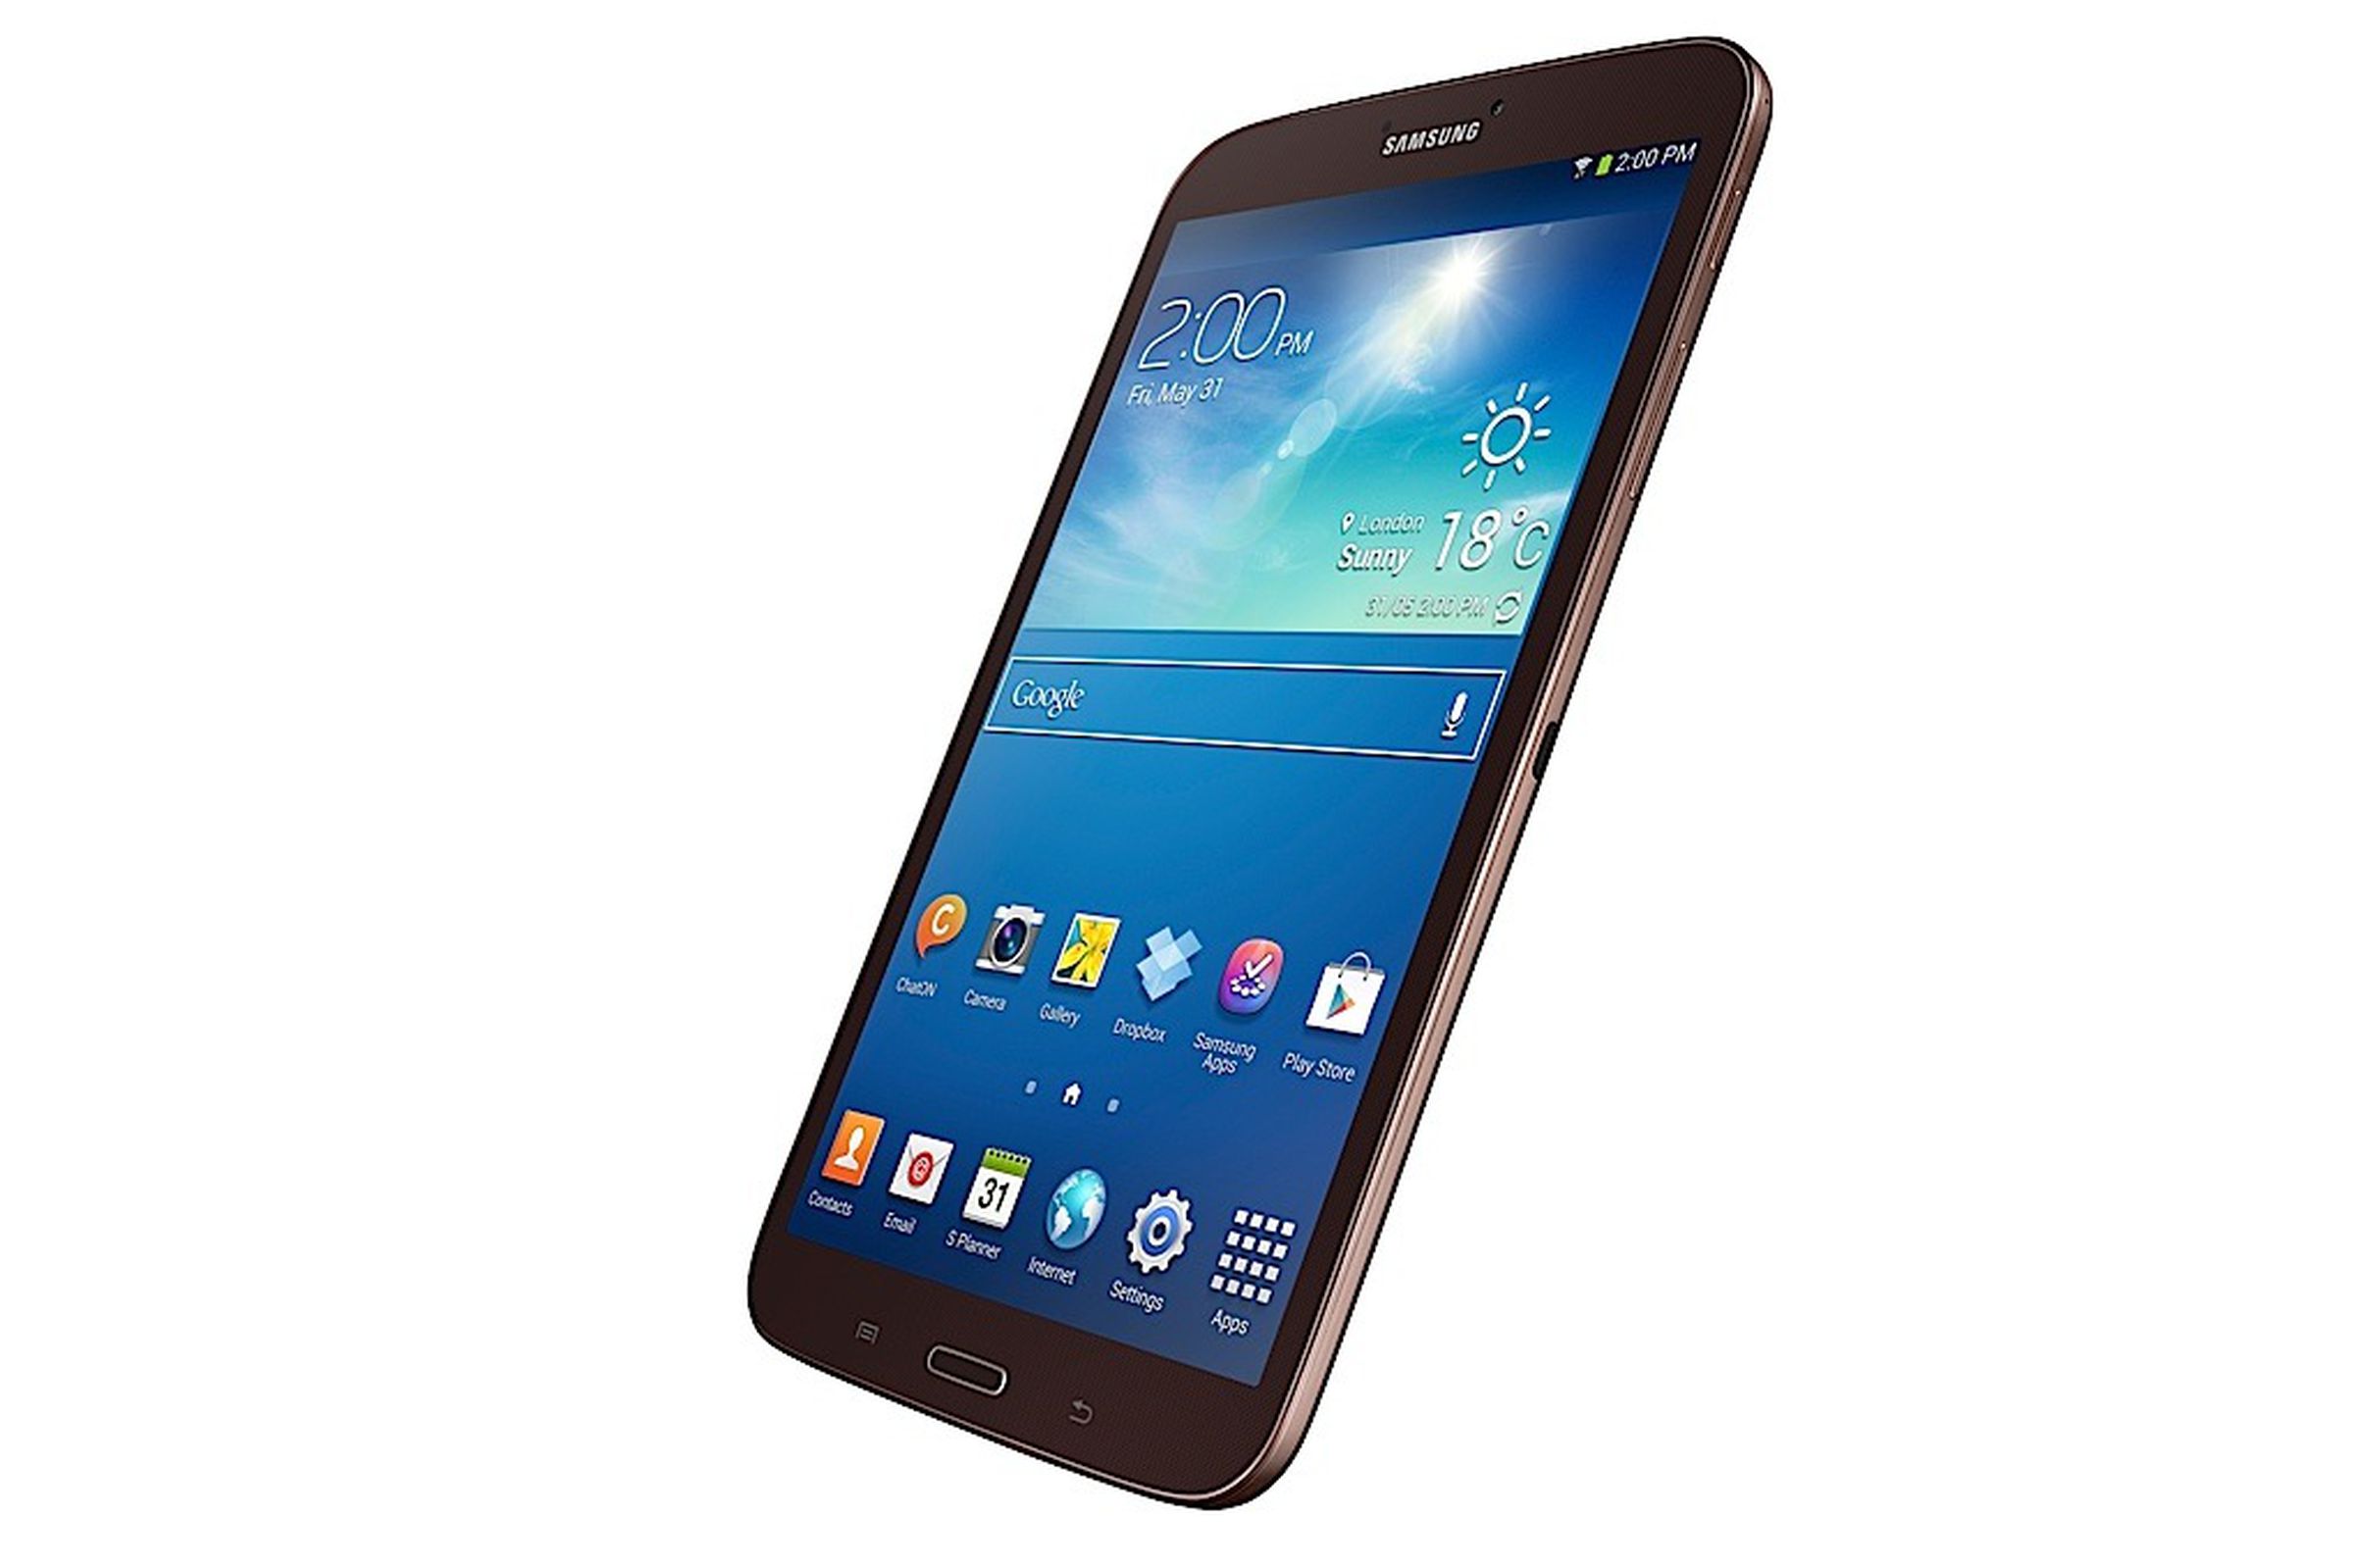 Samsung Galaxy Tab 3.0 family